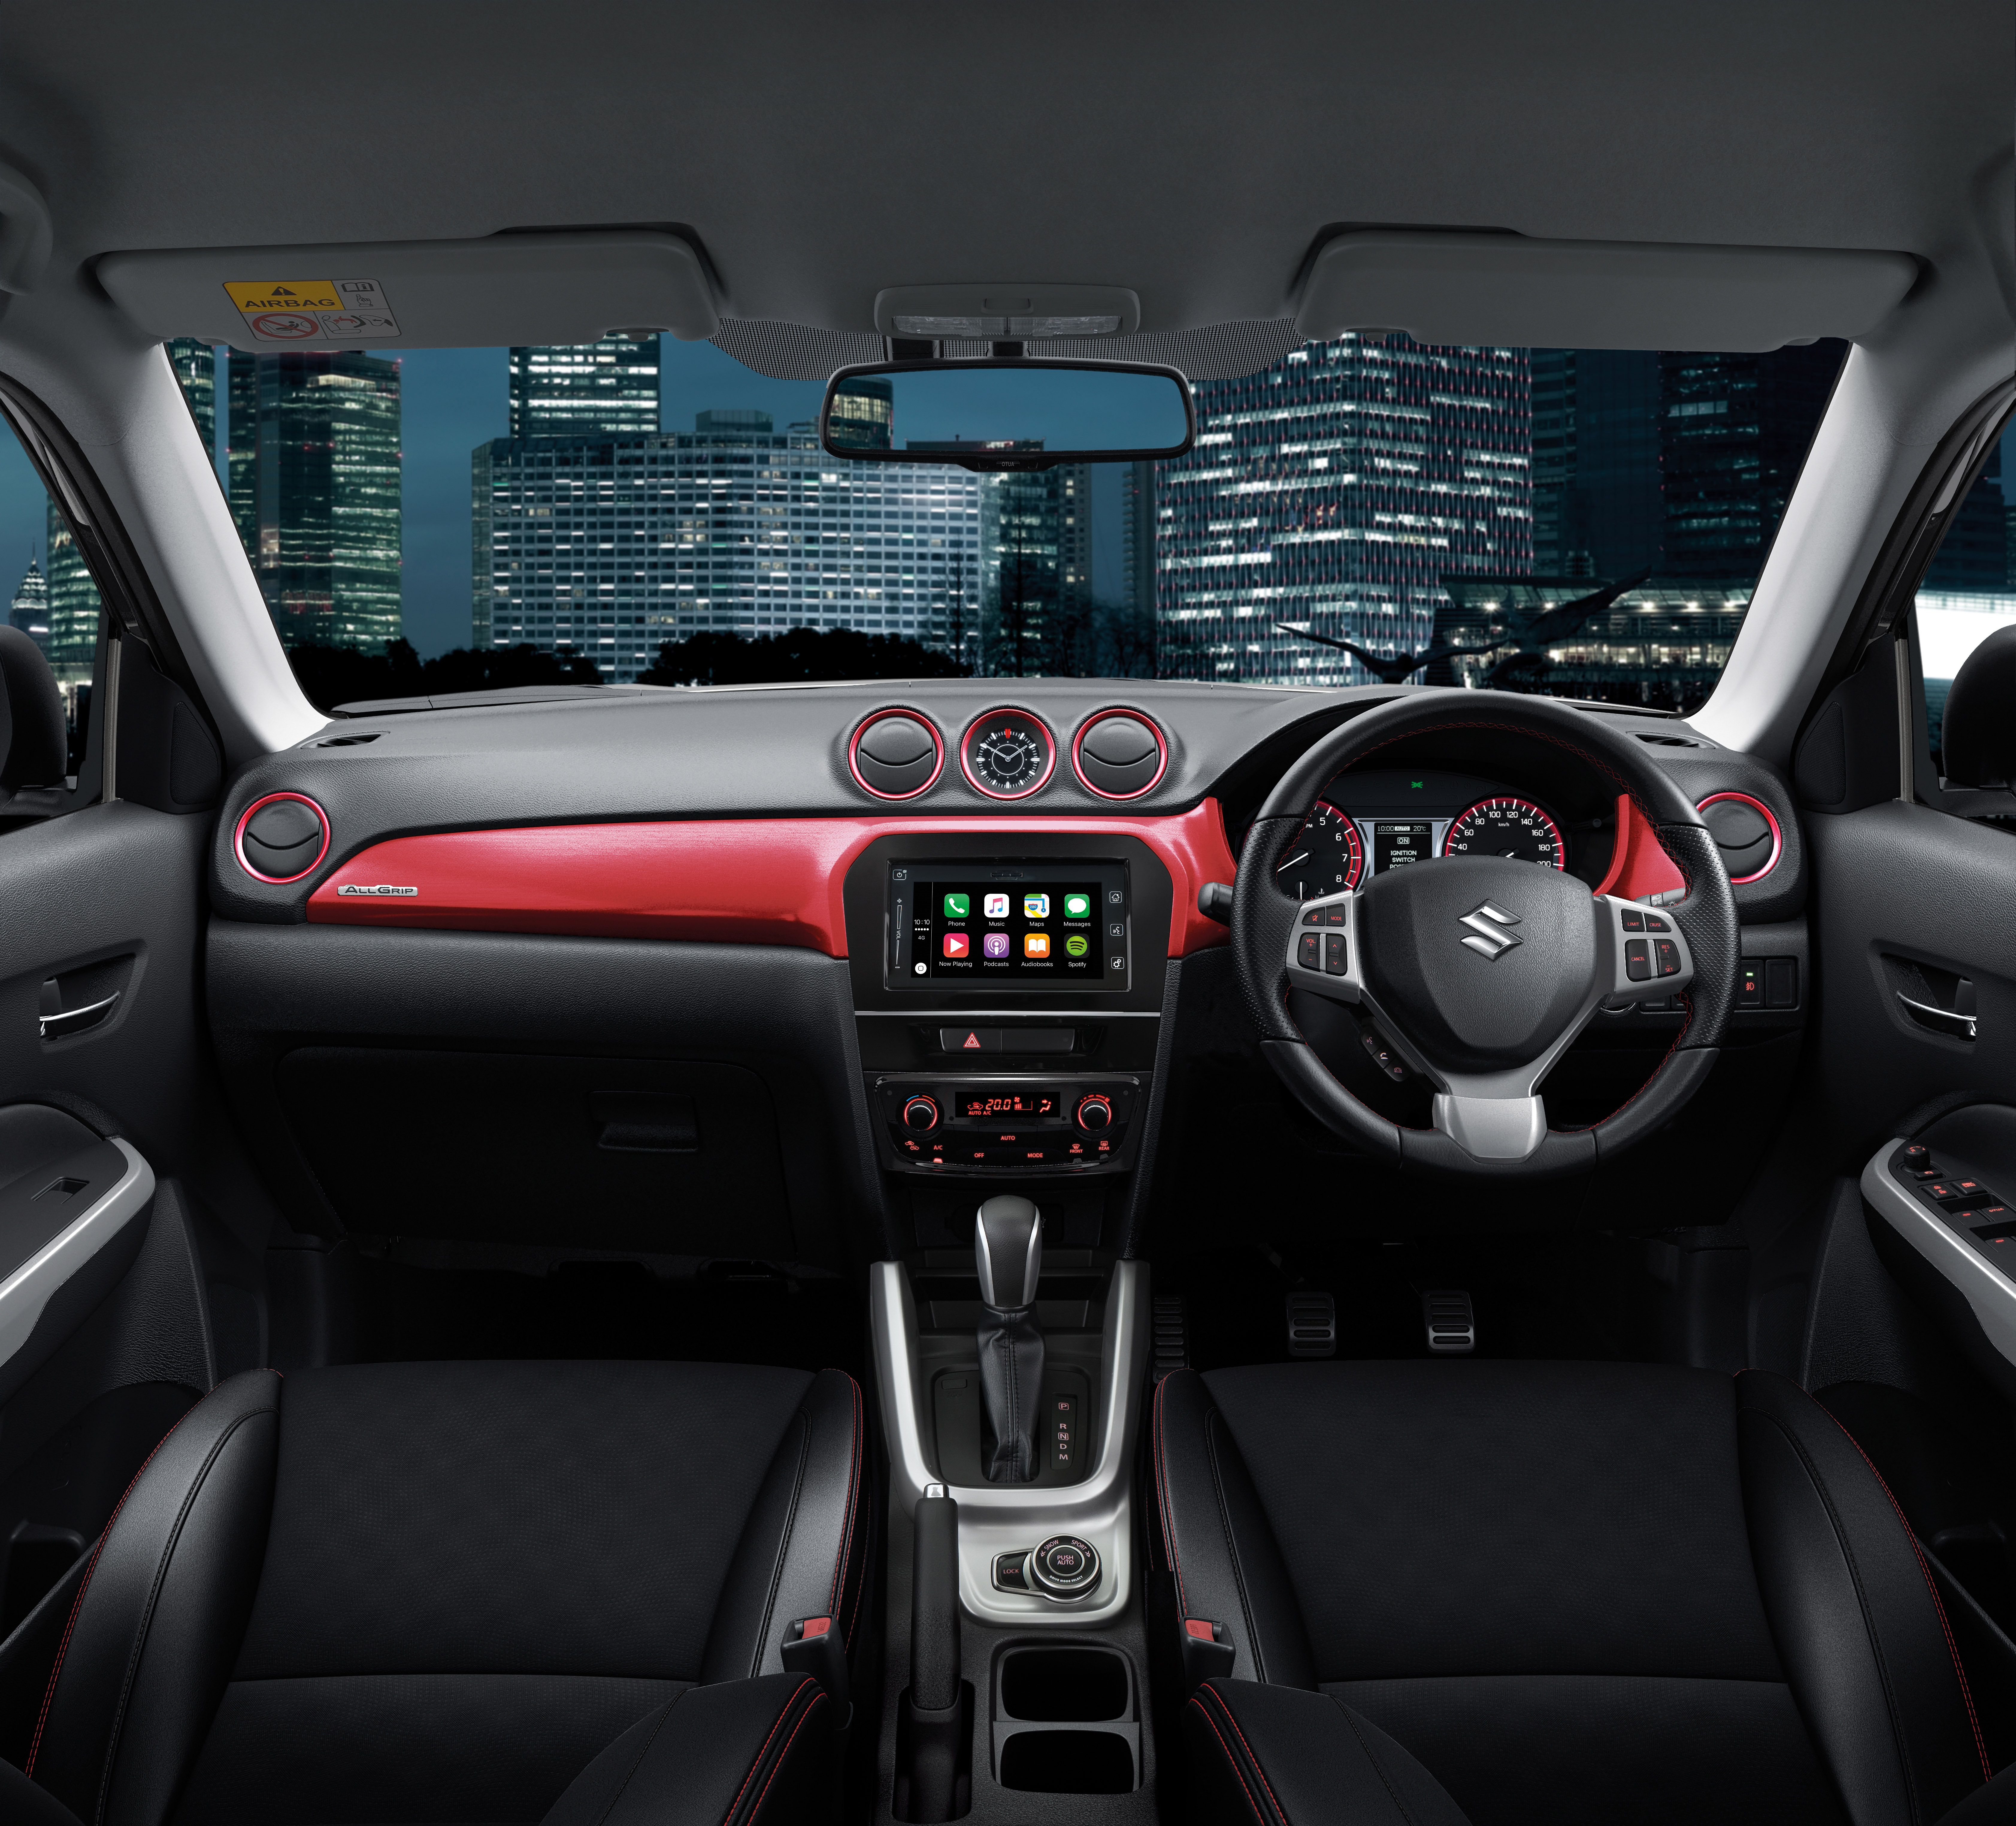 Suzuki Vitara S interior specifications